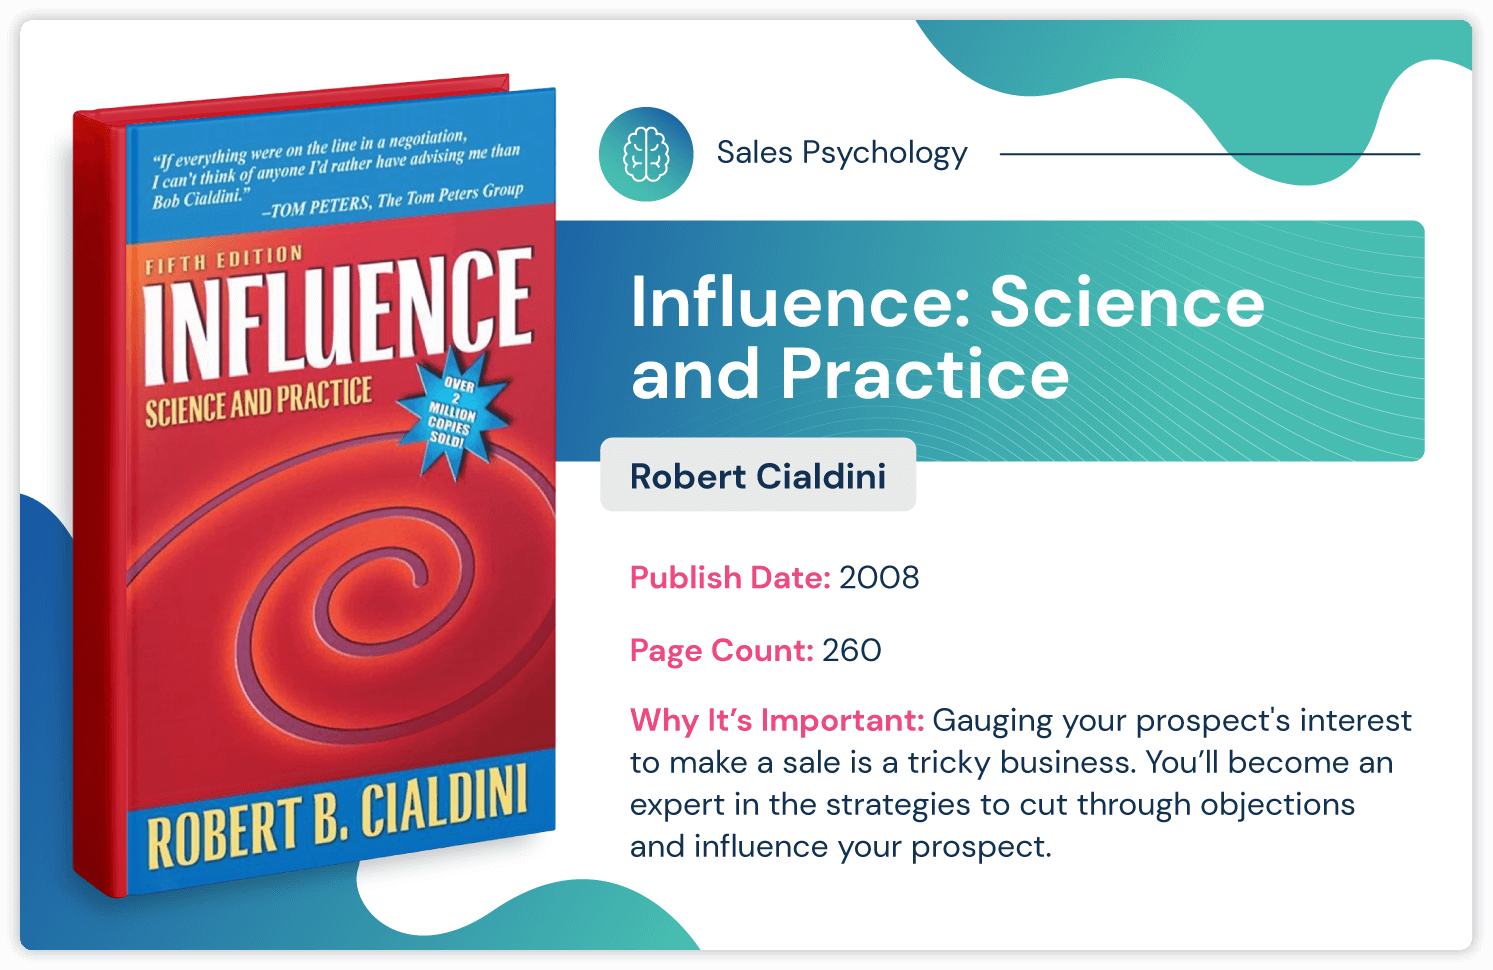 Robert Cialdini 的销售心理学书籍《影响力：科学与实践》讲述了如何影响销售策略；于 2008 年出版，长达 260 页。